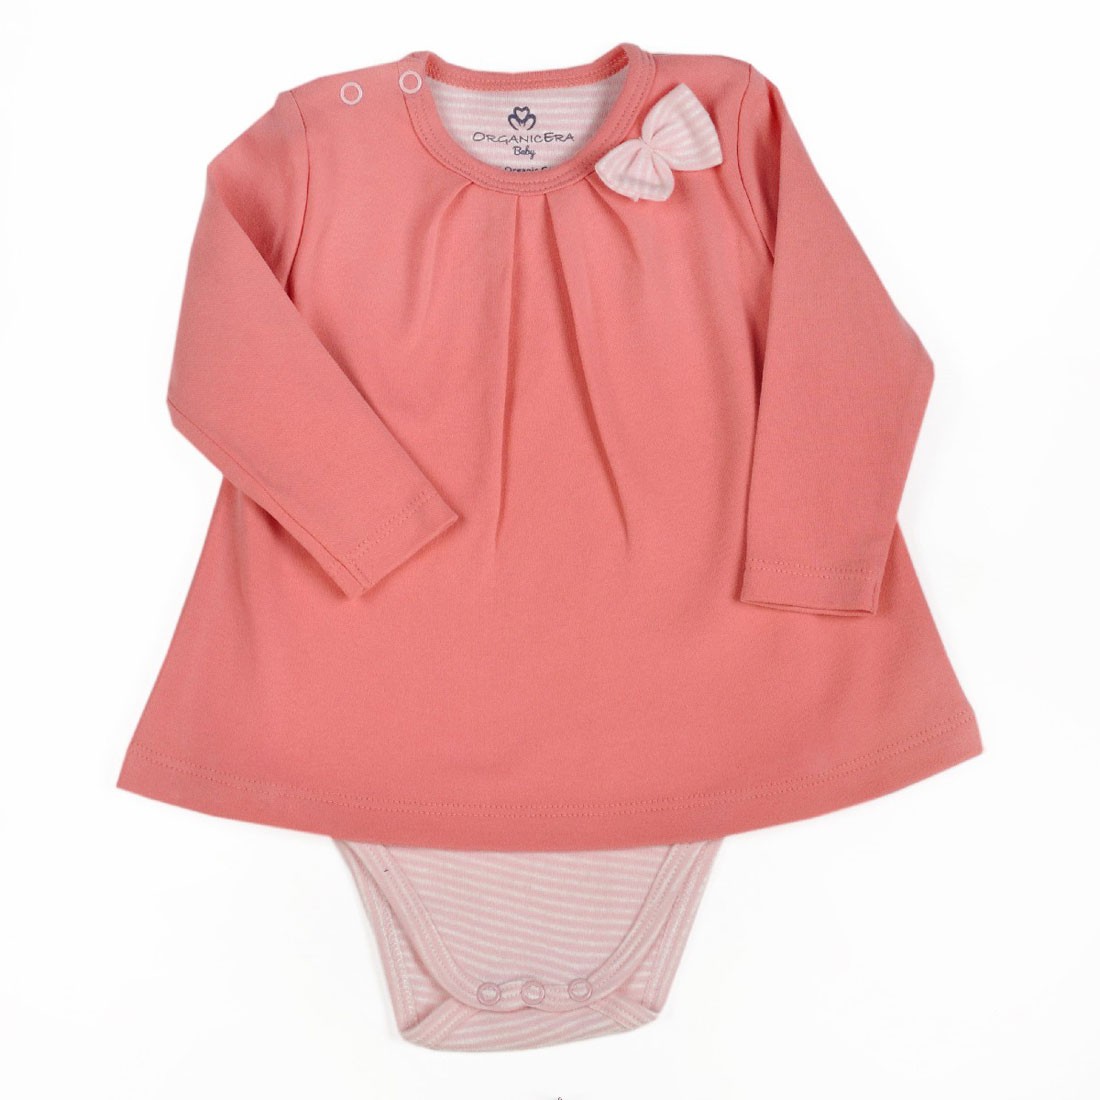 OrganicEra Organic Baby Tunic Bodysuit, with Bow